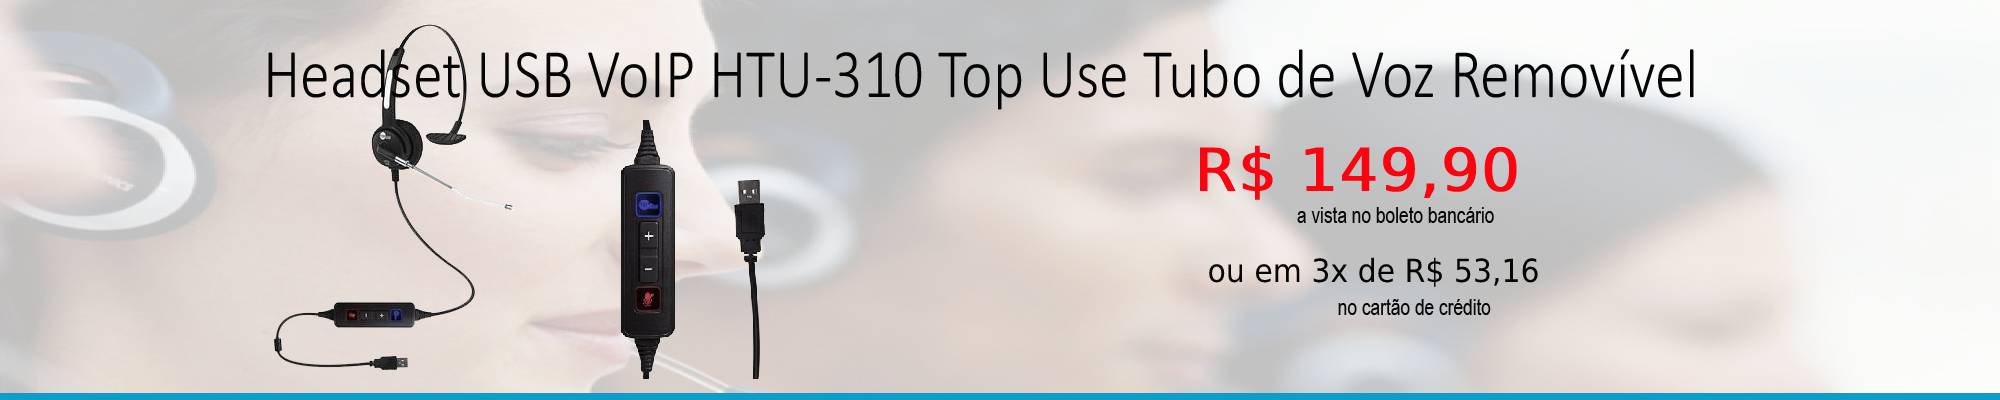 Headset USB VoIP HTU-310 Top Use Tubo de Voz Removvel